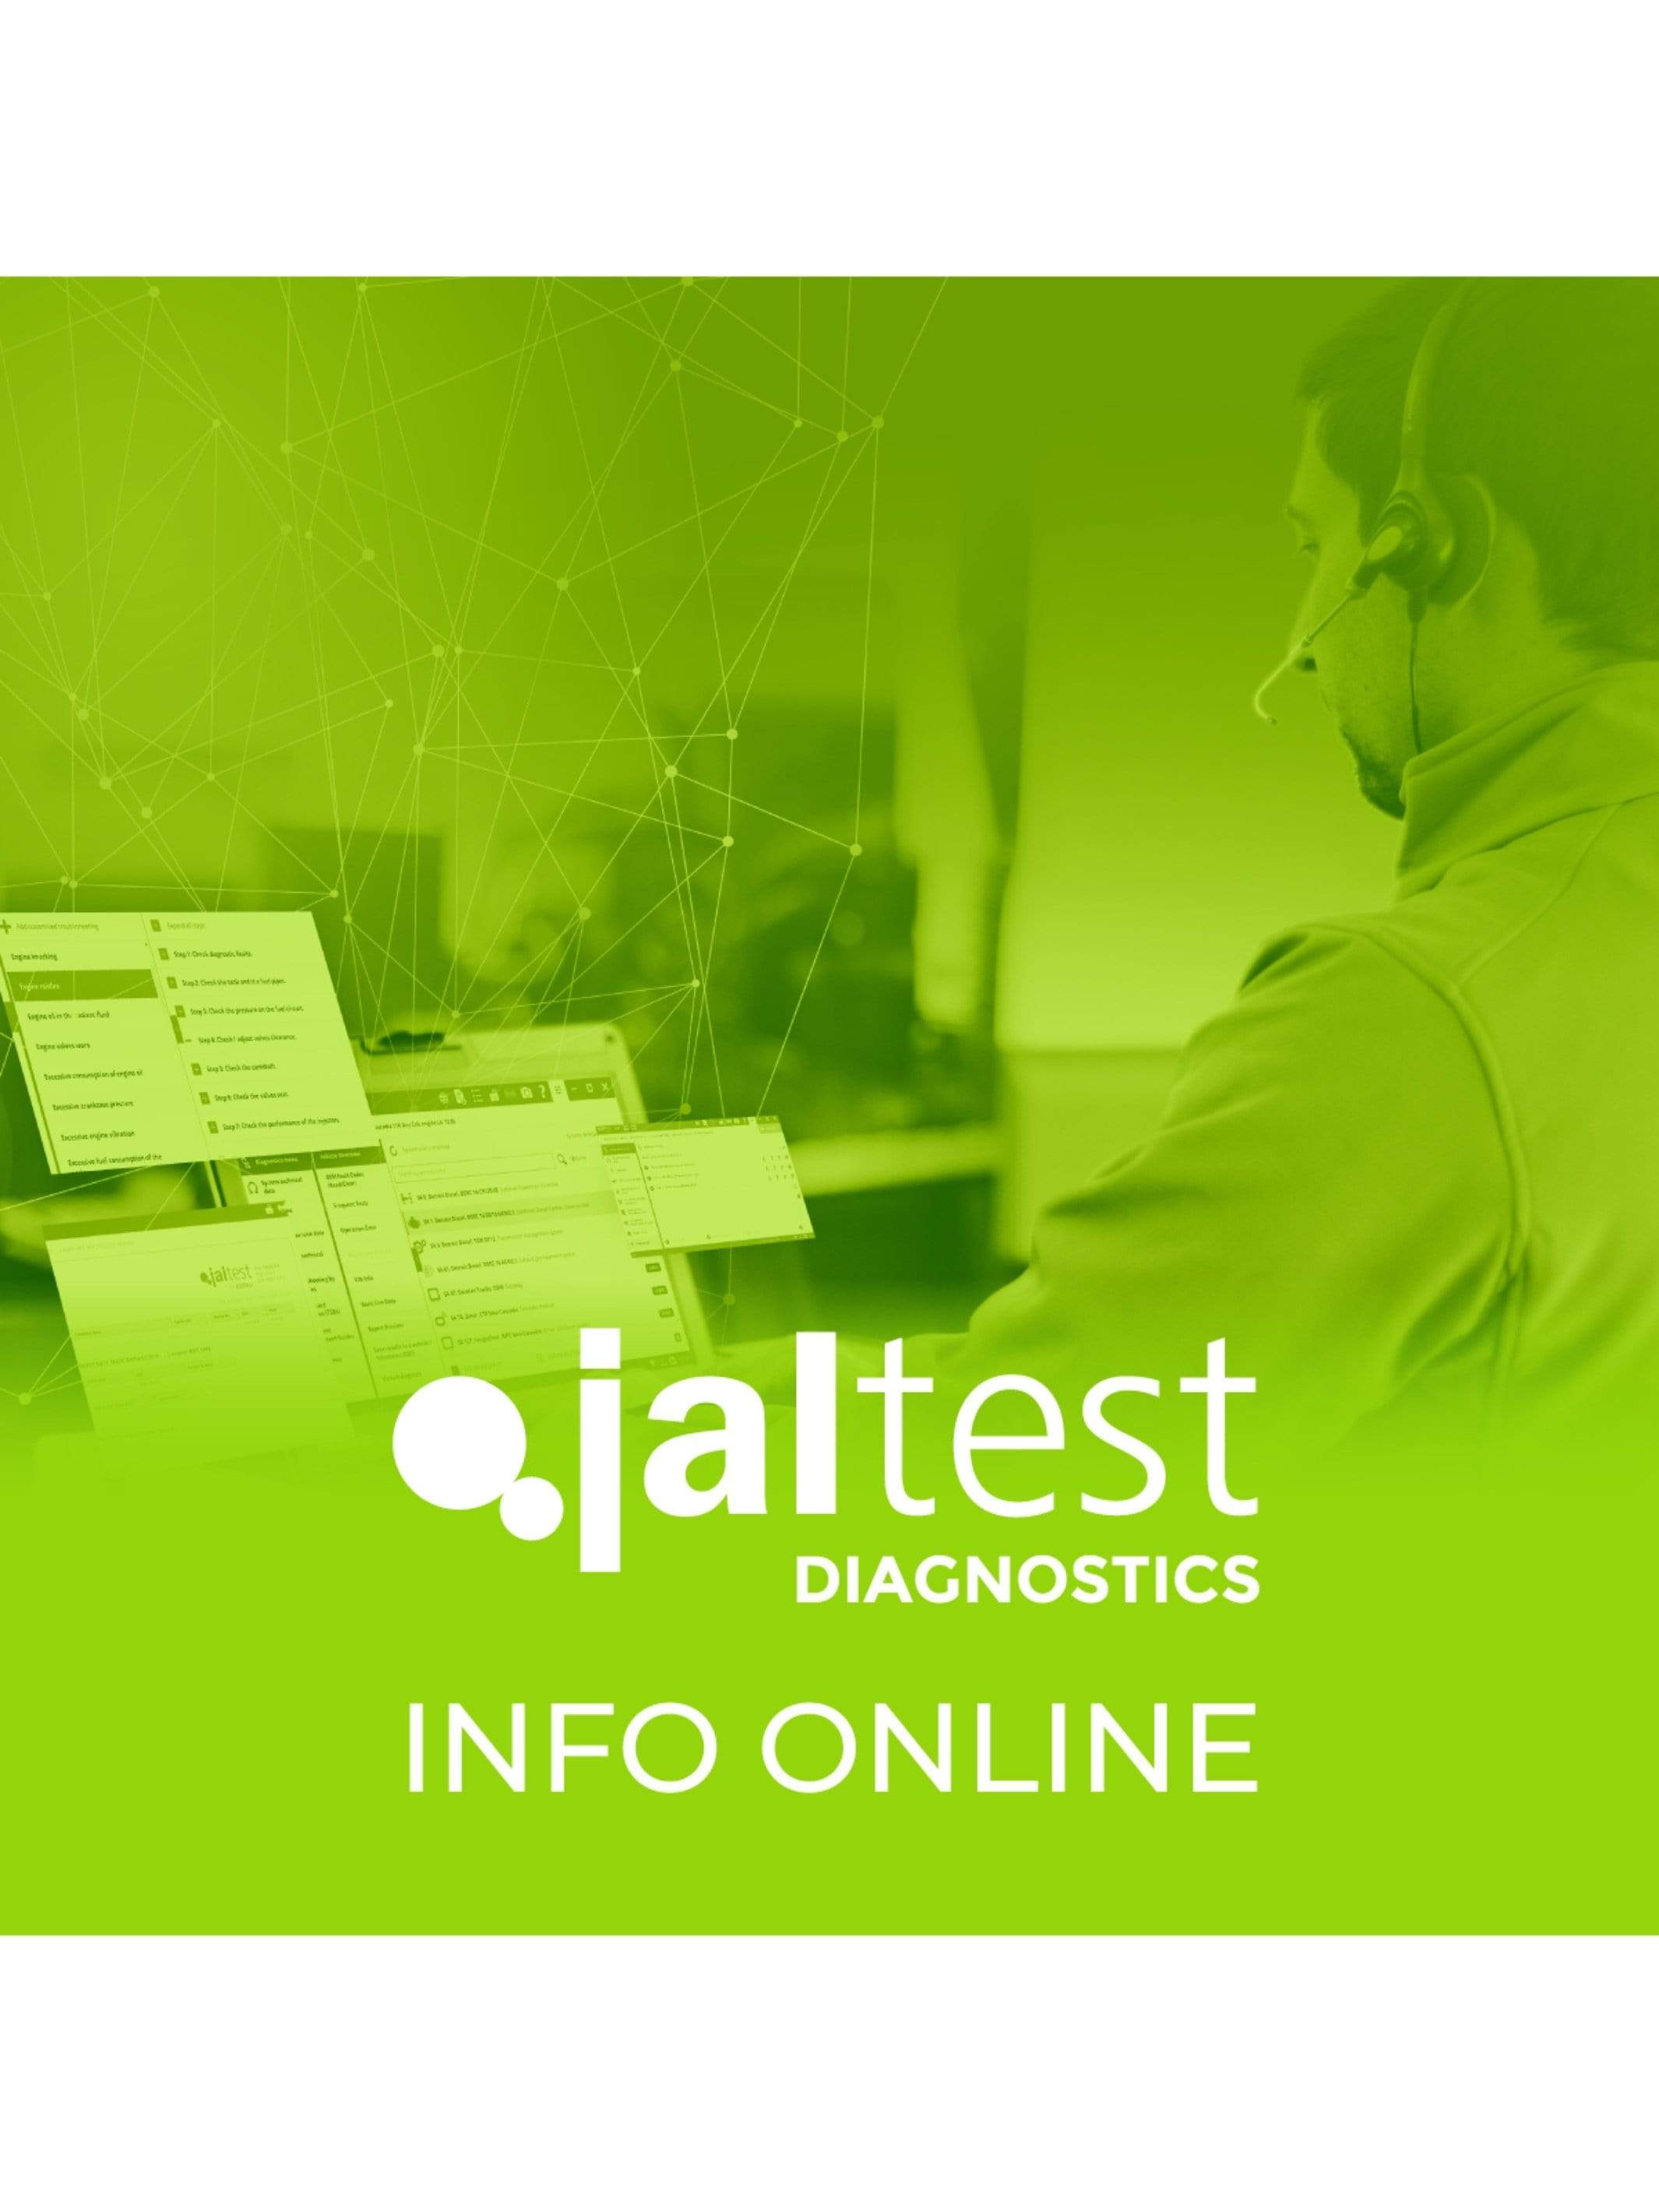 Jaltest AGV Diagnostics Info - Jaltest Deluxe Diagnostic Computer Kit for Commercial Vehicle, Construction & Agriculture Equipment